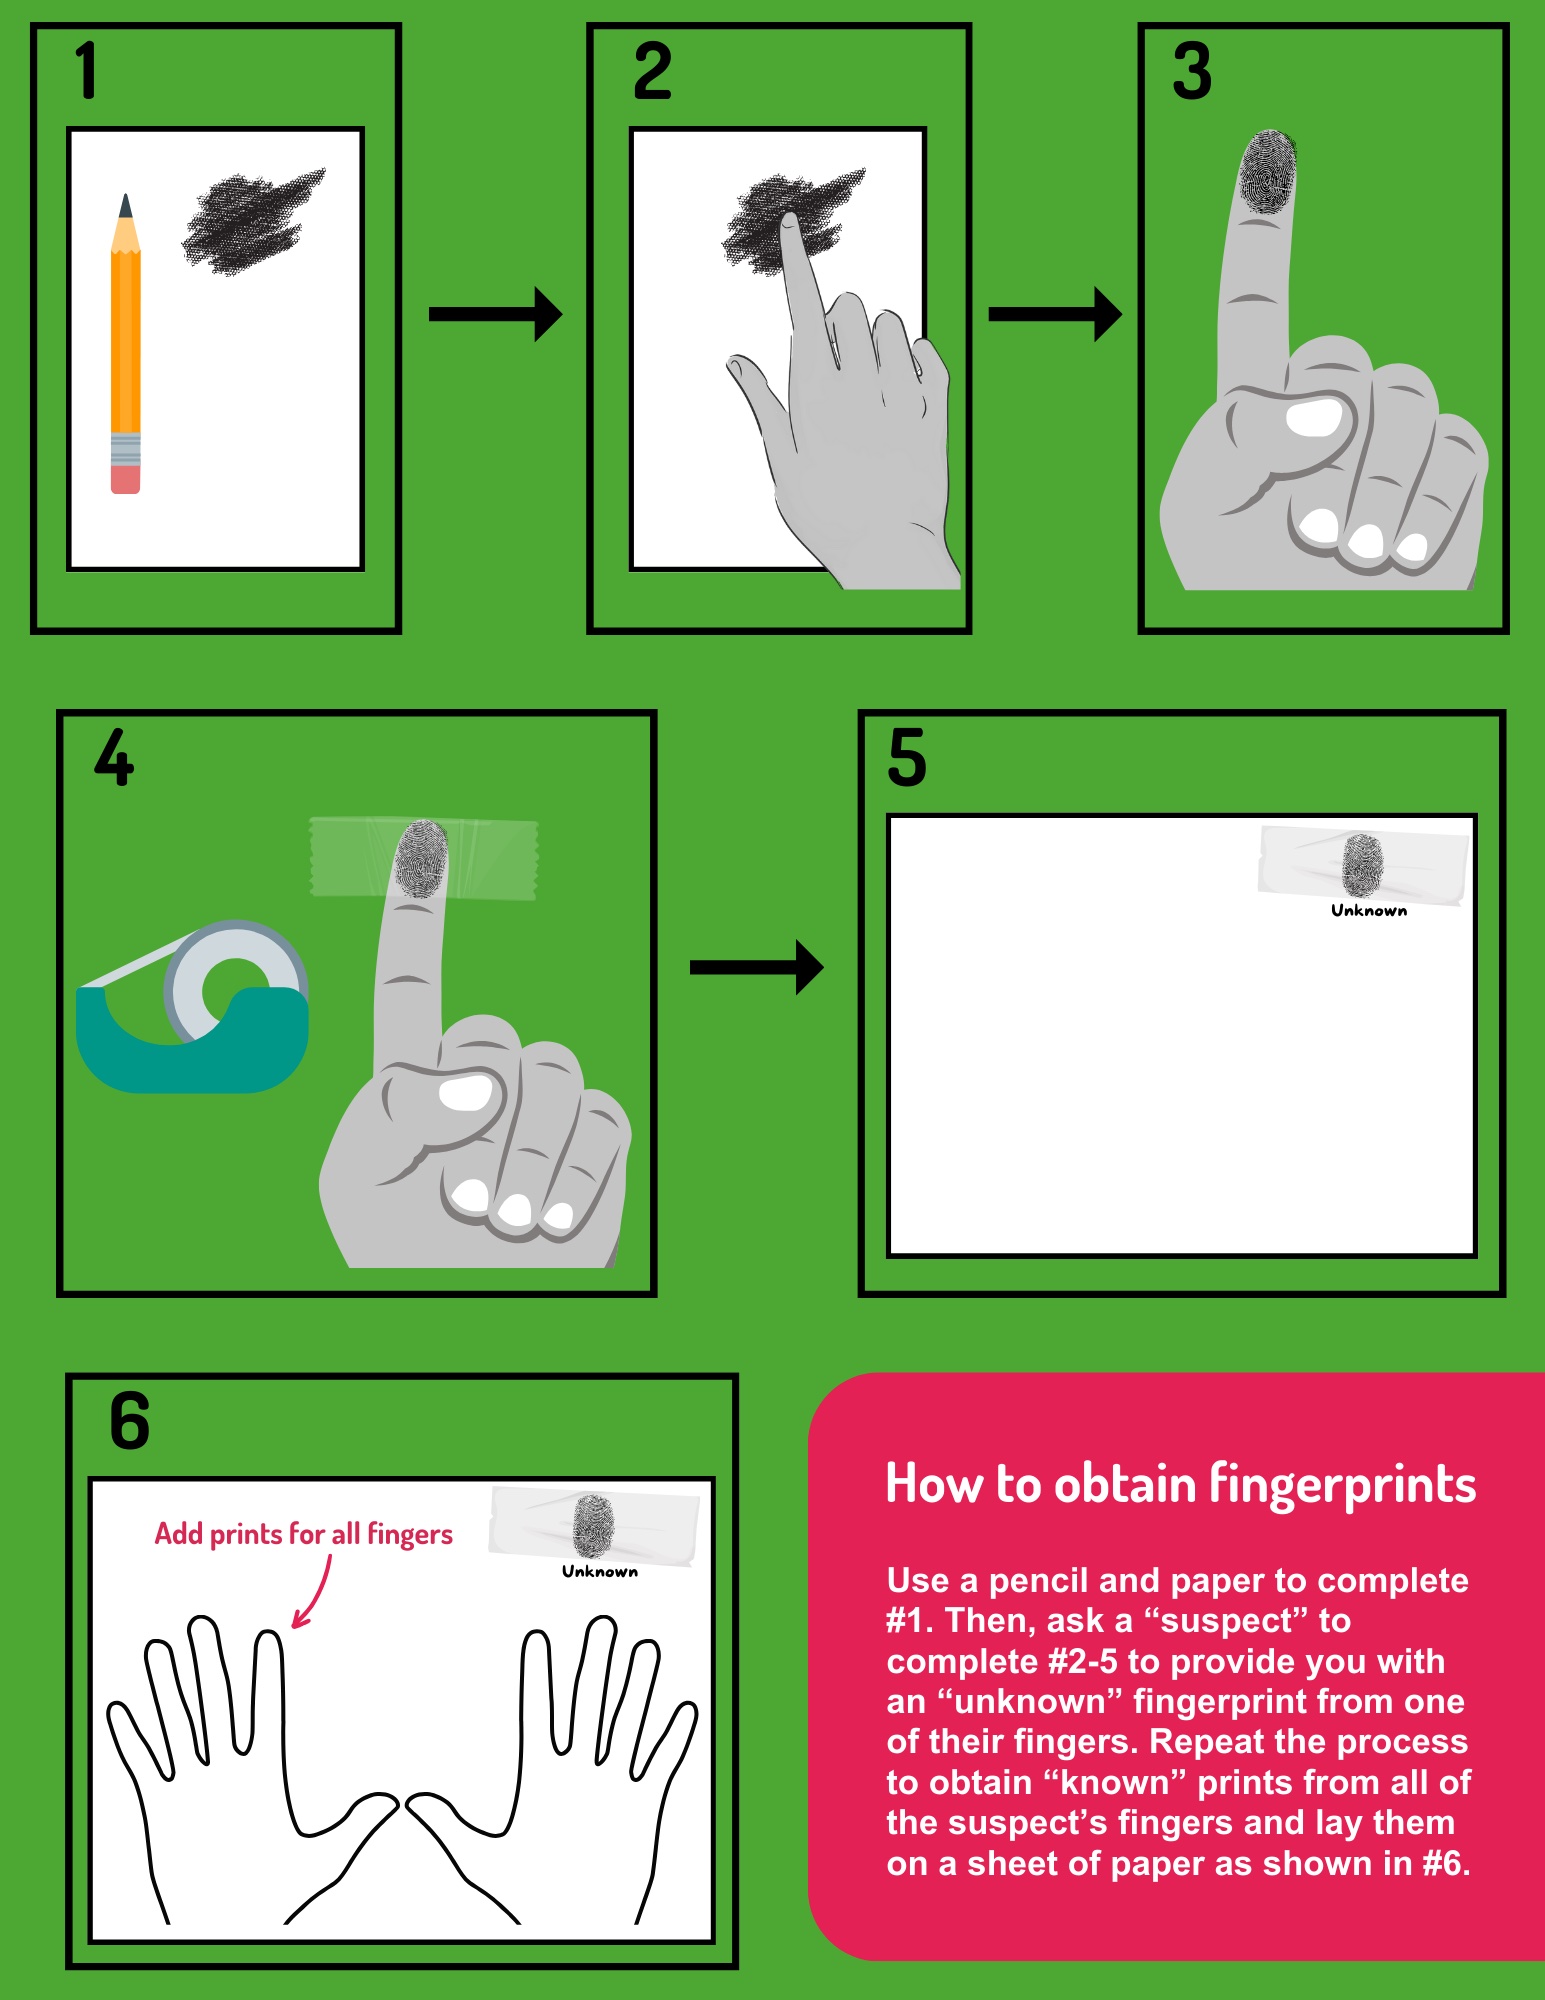 How to obtain fingerprints info graphic